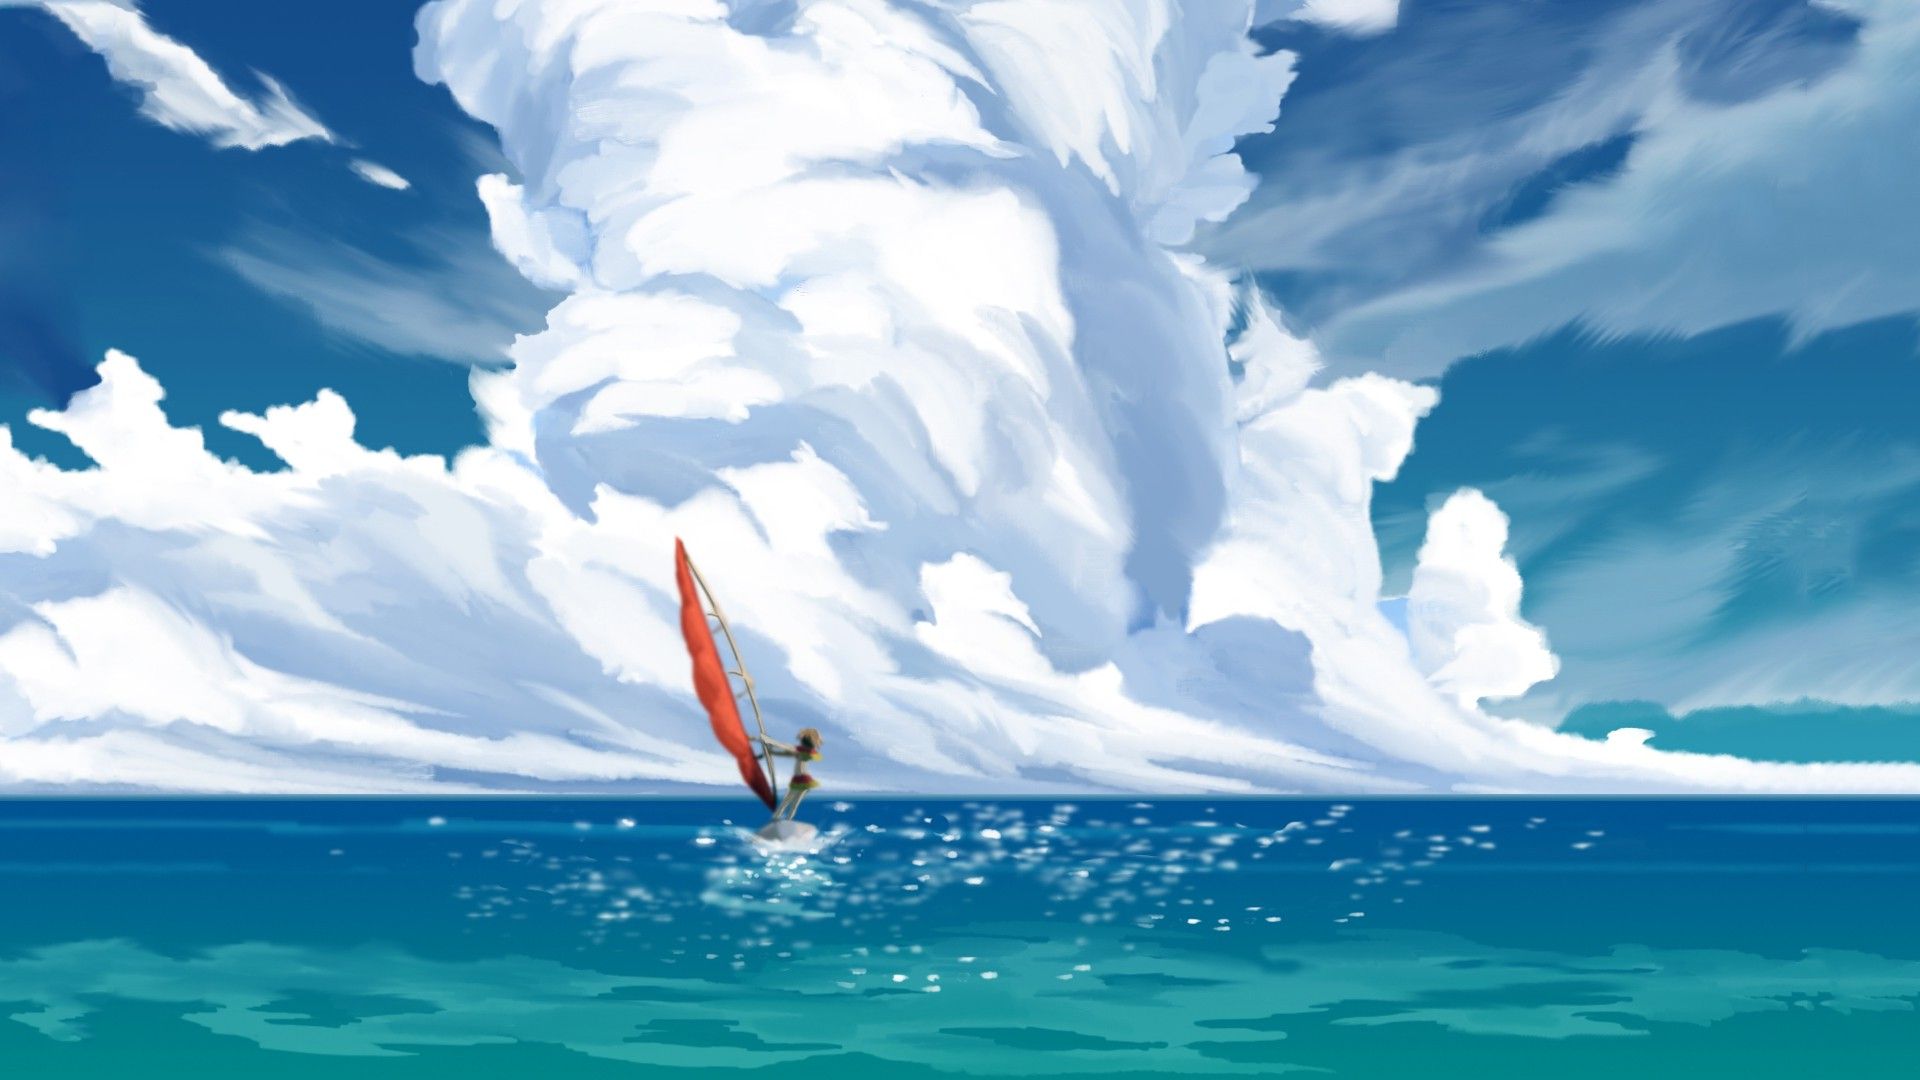 ocean waves anime theme song